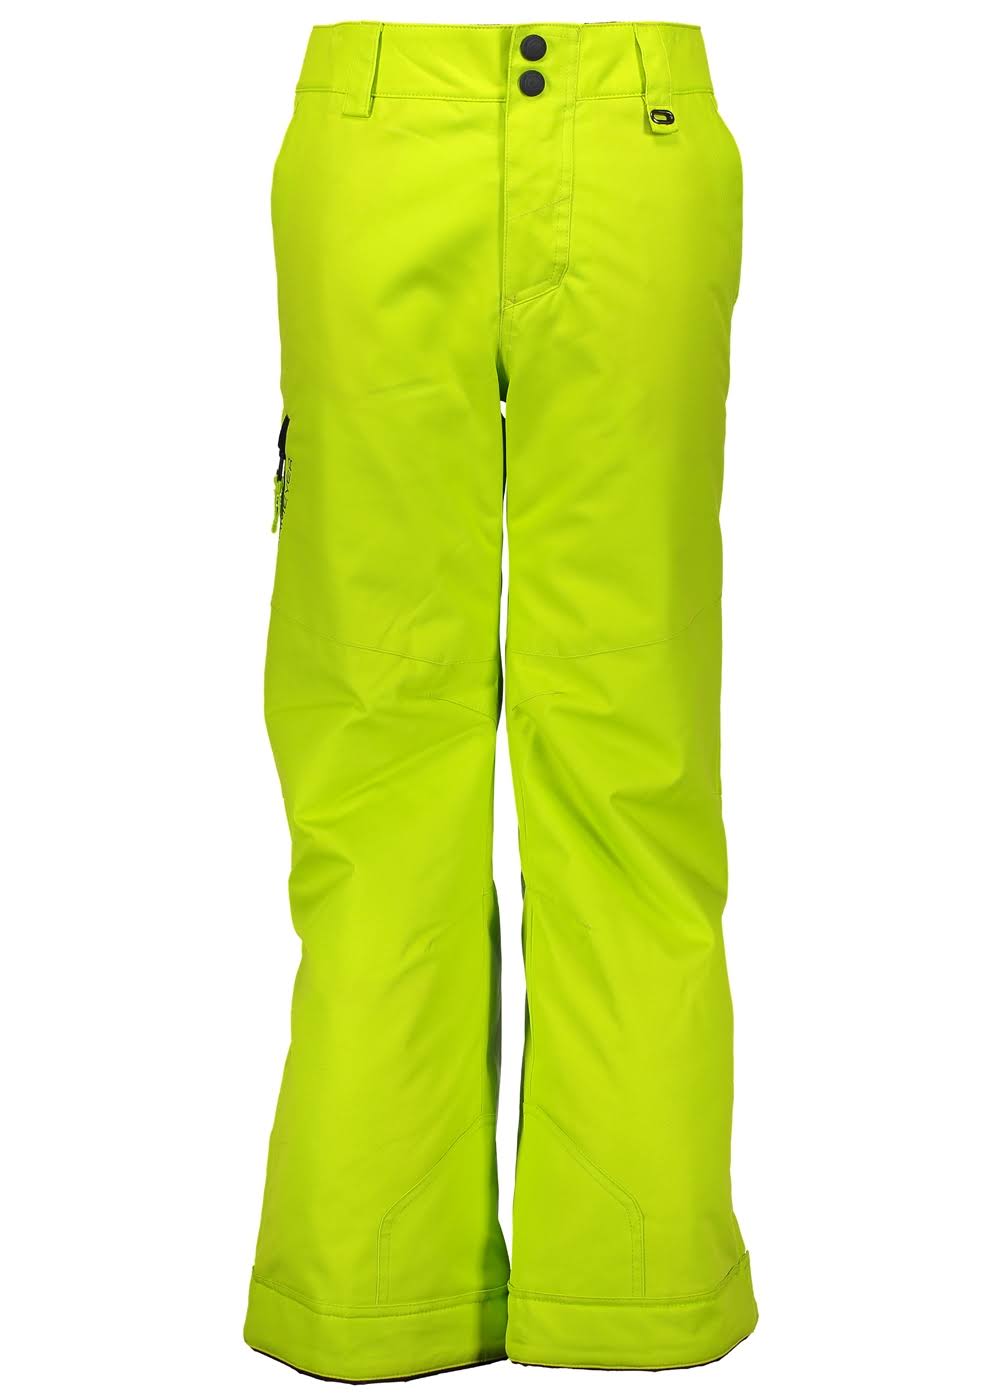 Obermeyer Brisk Insulated Ski Pant Boys', Green Flash, M